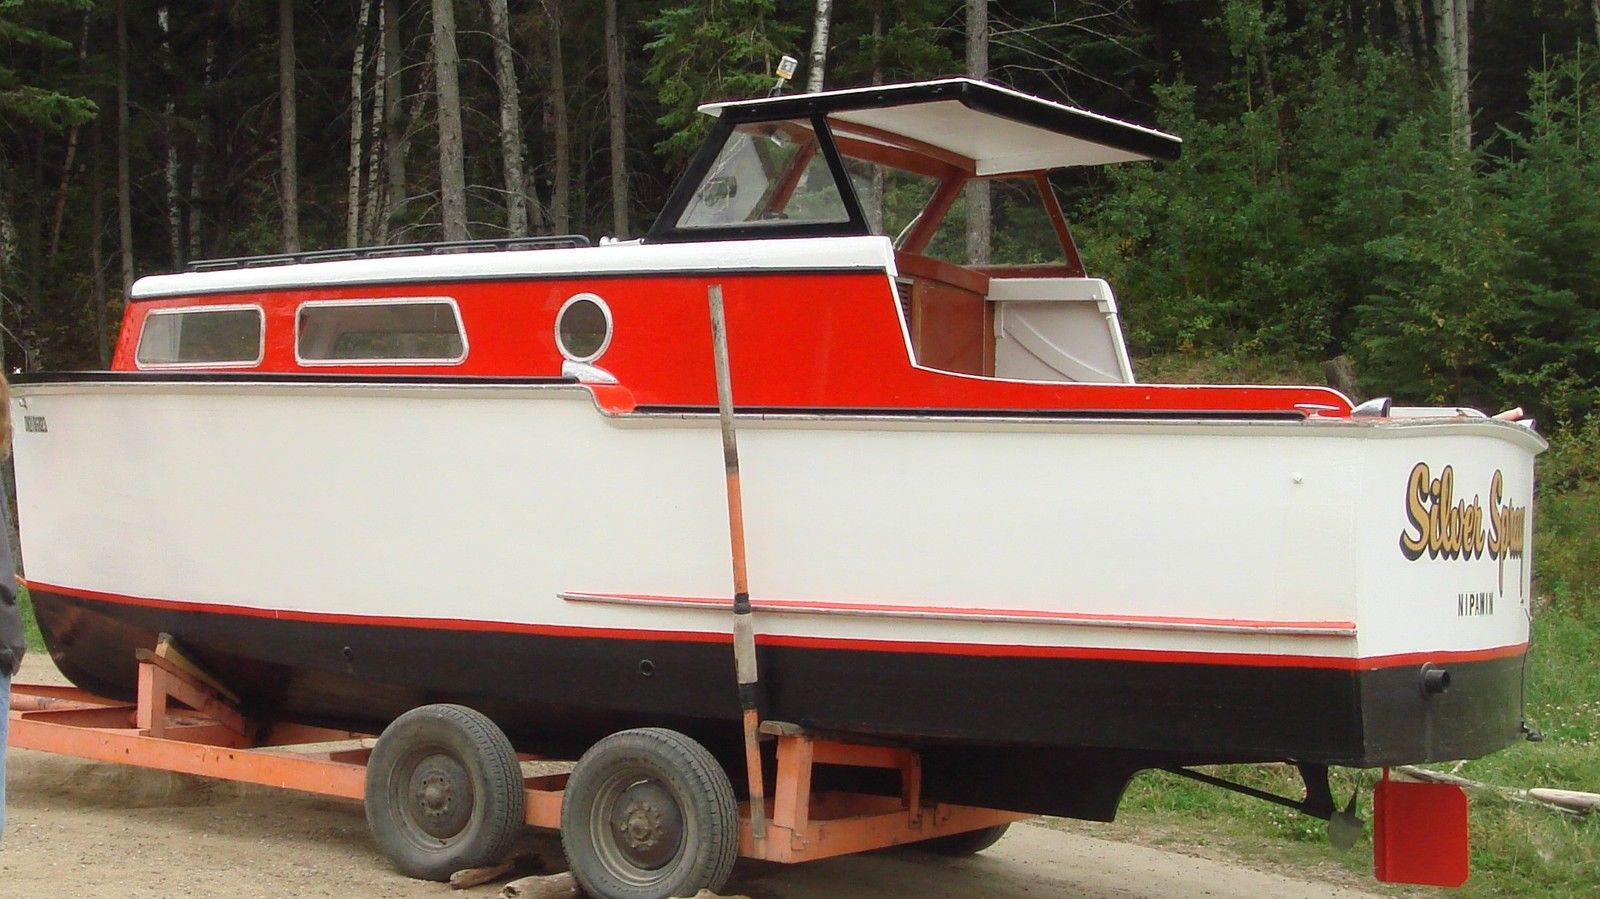 Homemade Vintage 25' Cabin Cruiser 1967 for sale for $700 ...